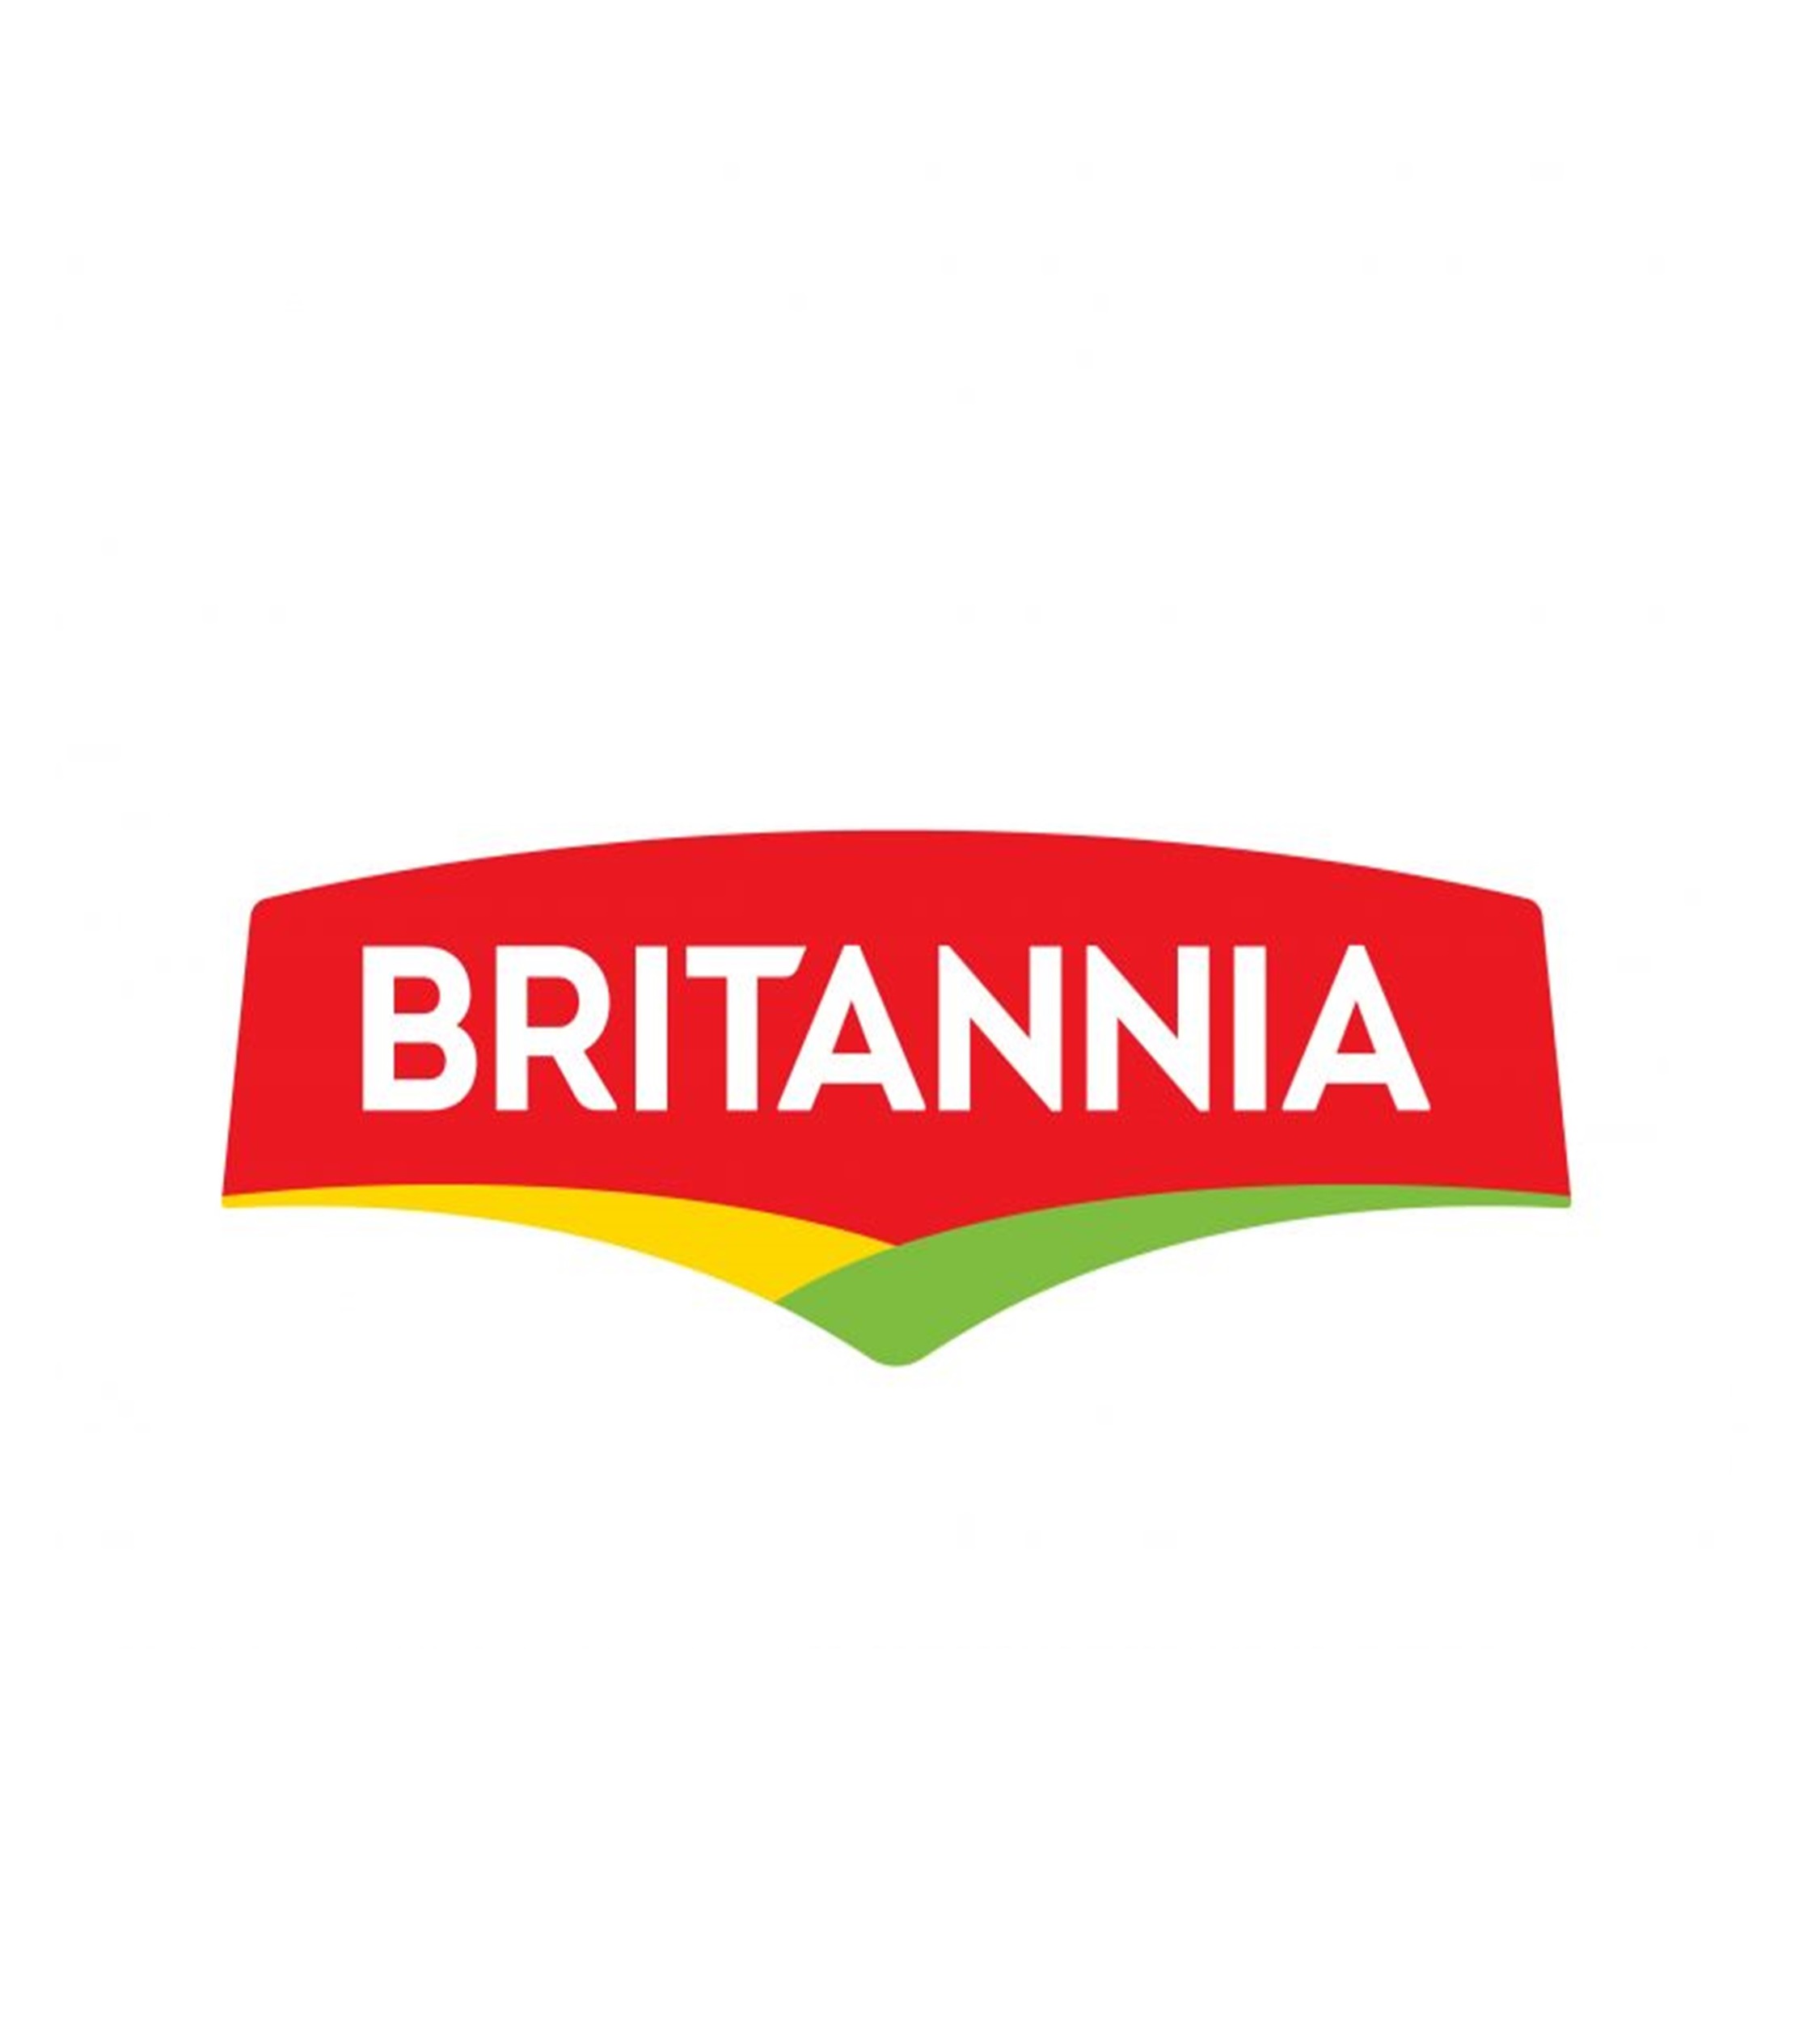 Britannia - AoneCaster customer